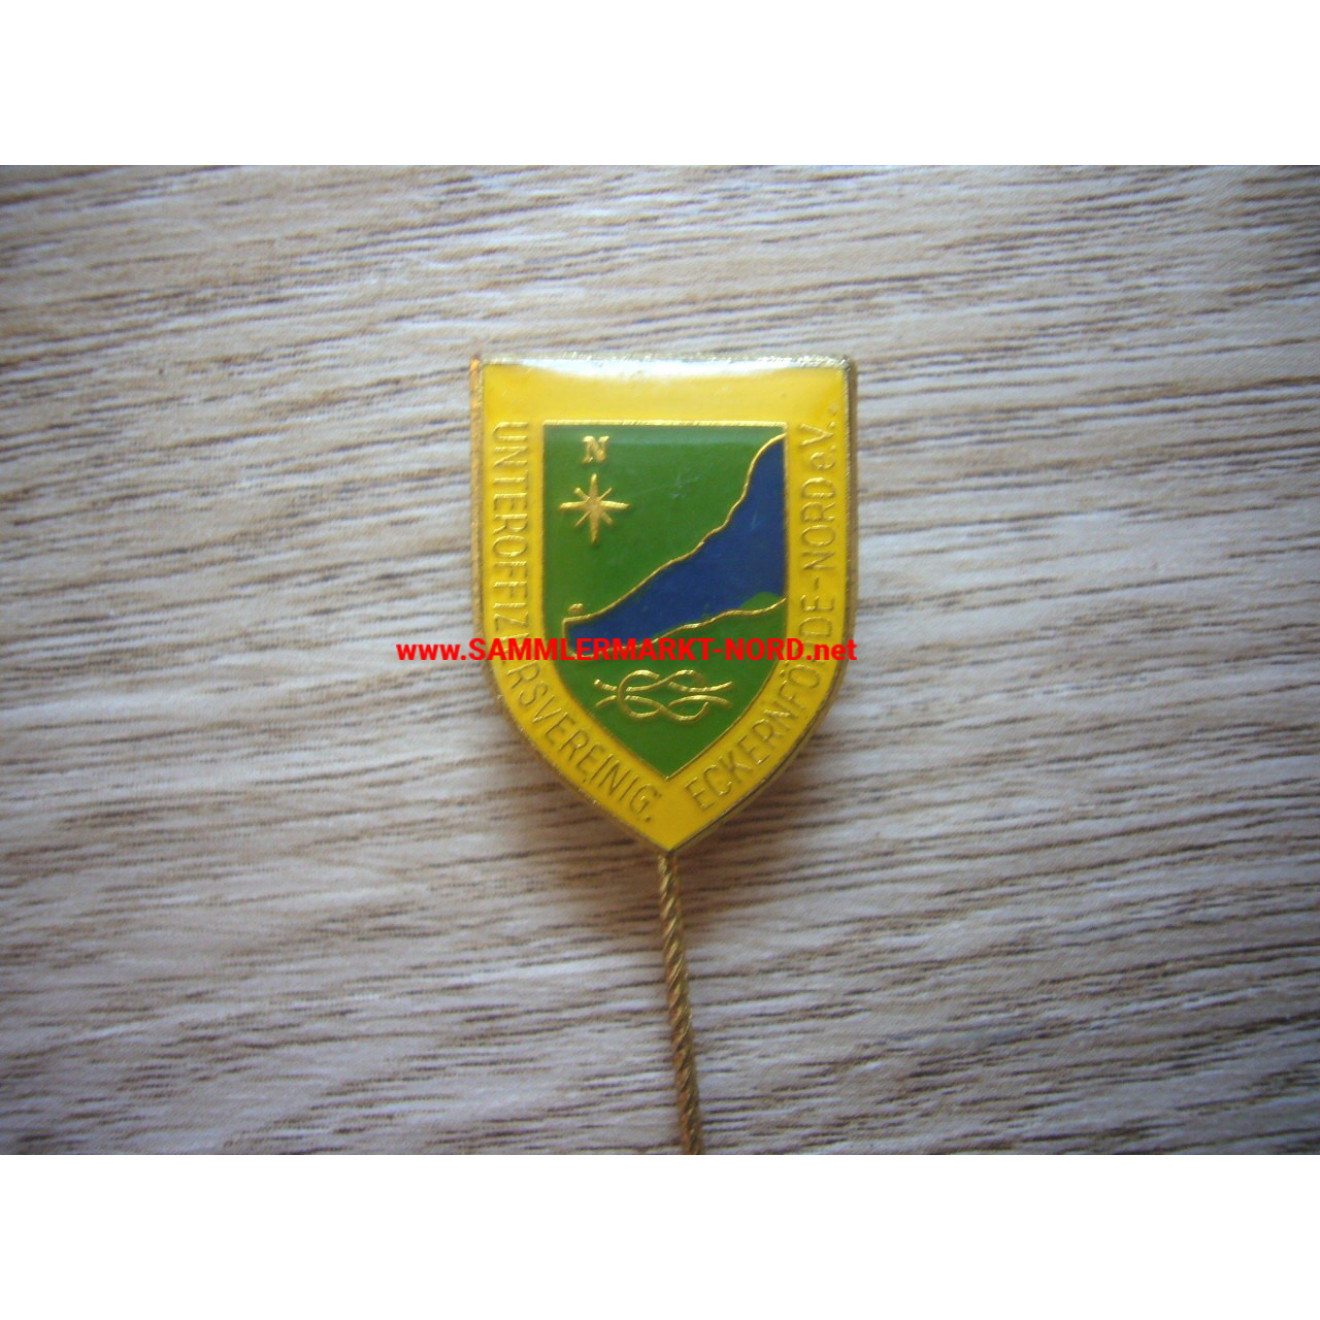 Bundesmarine - NCO Association Eckernförde North - Membership pin